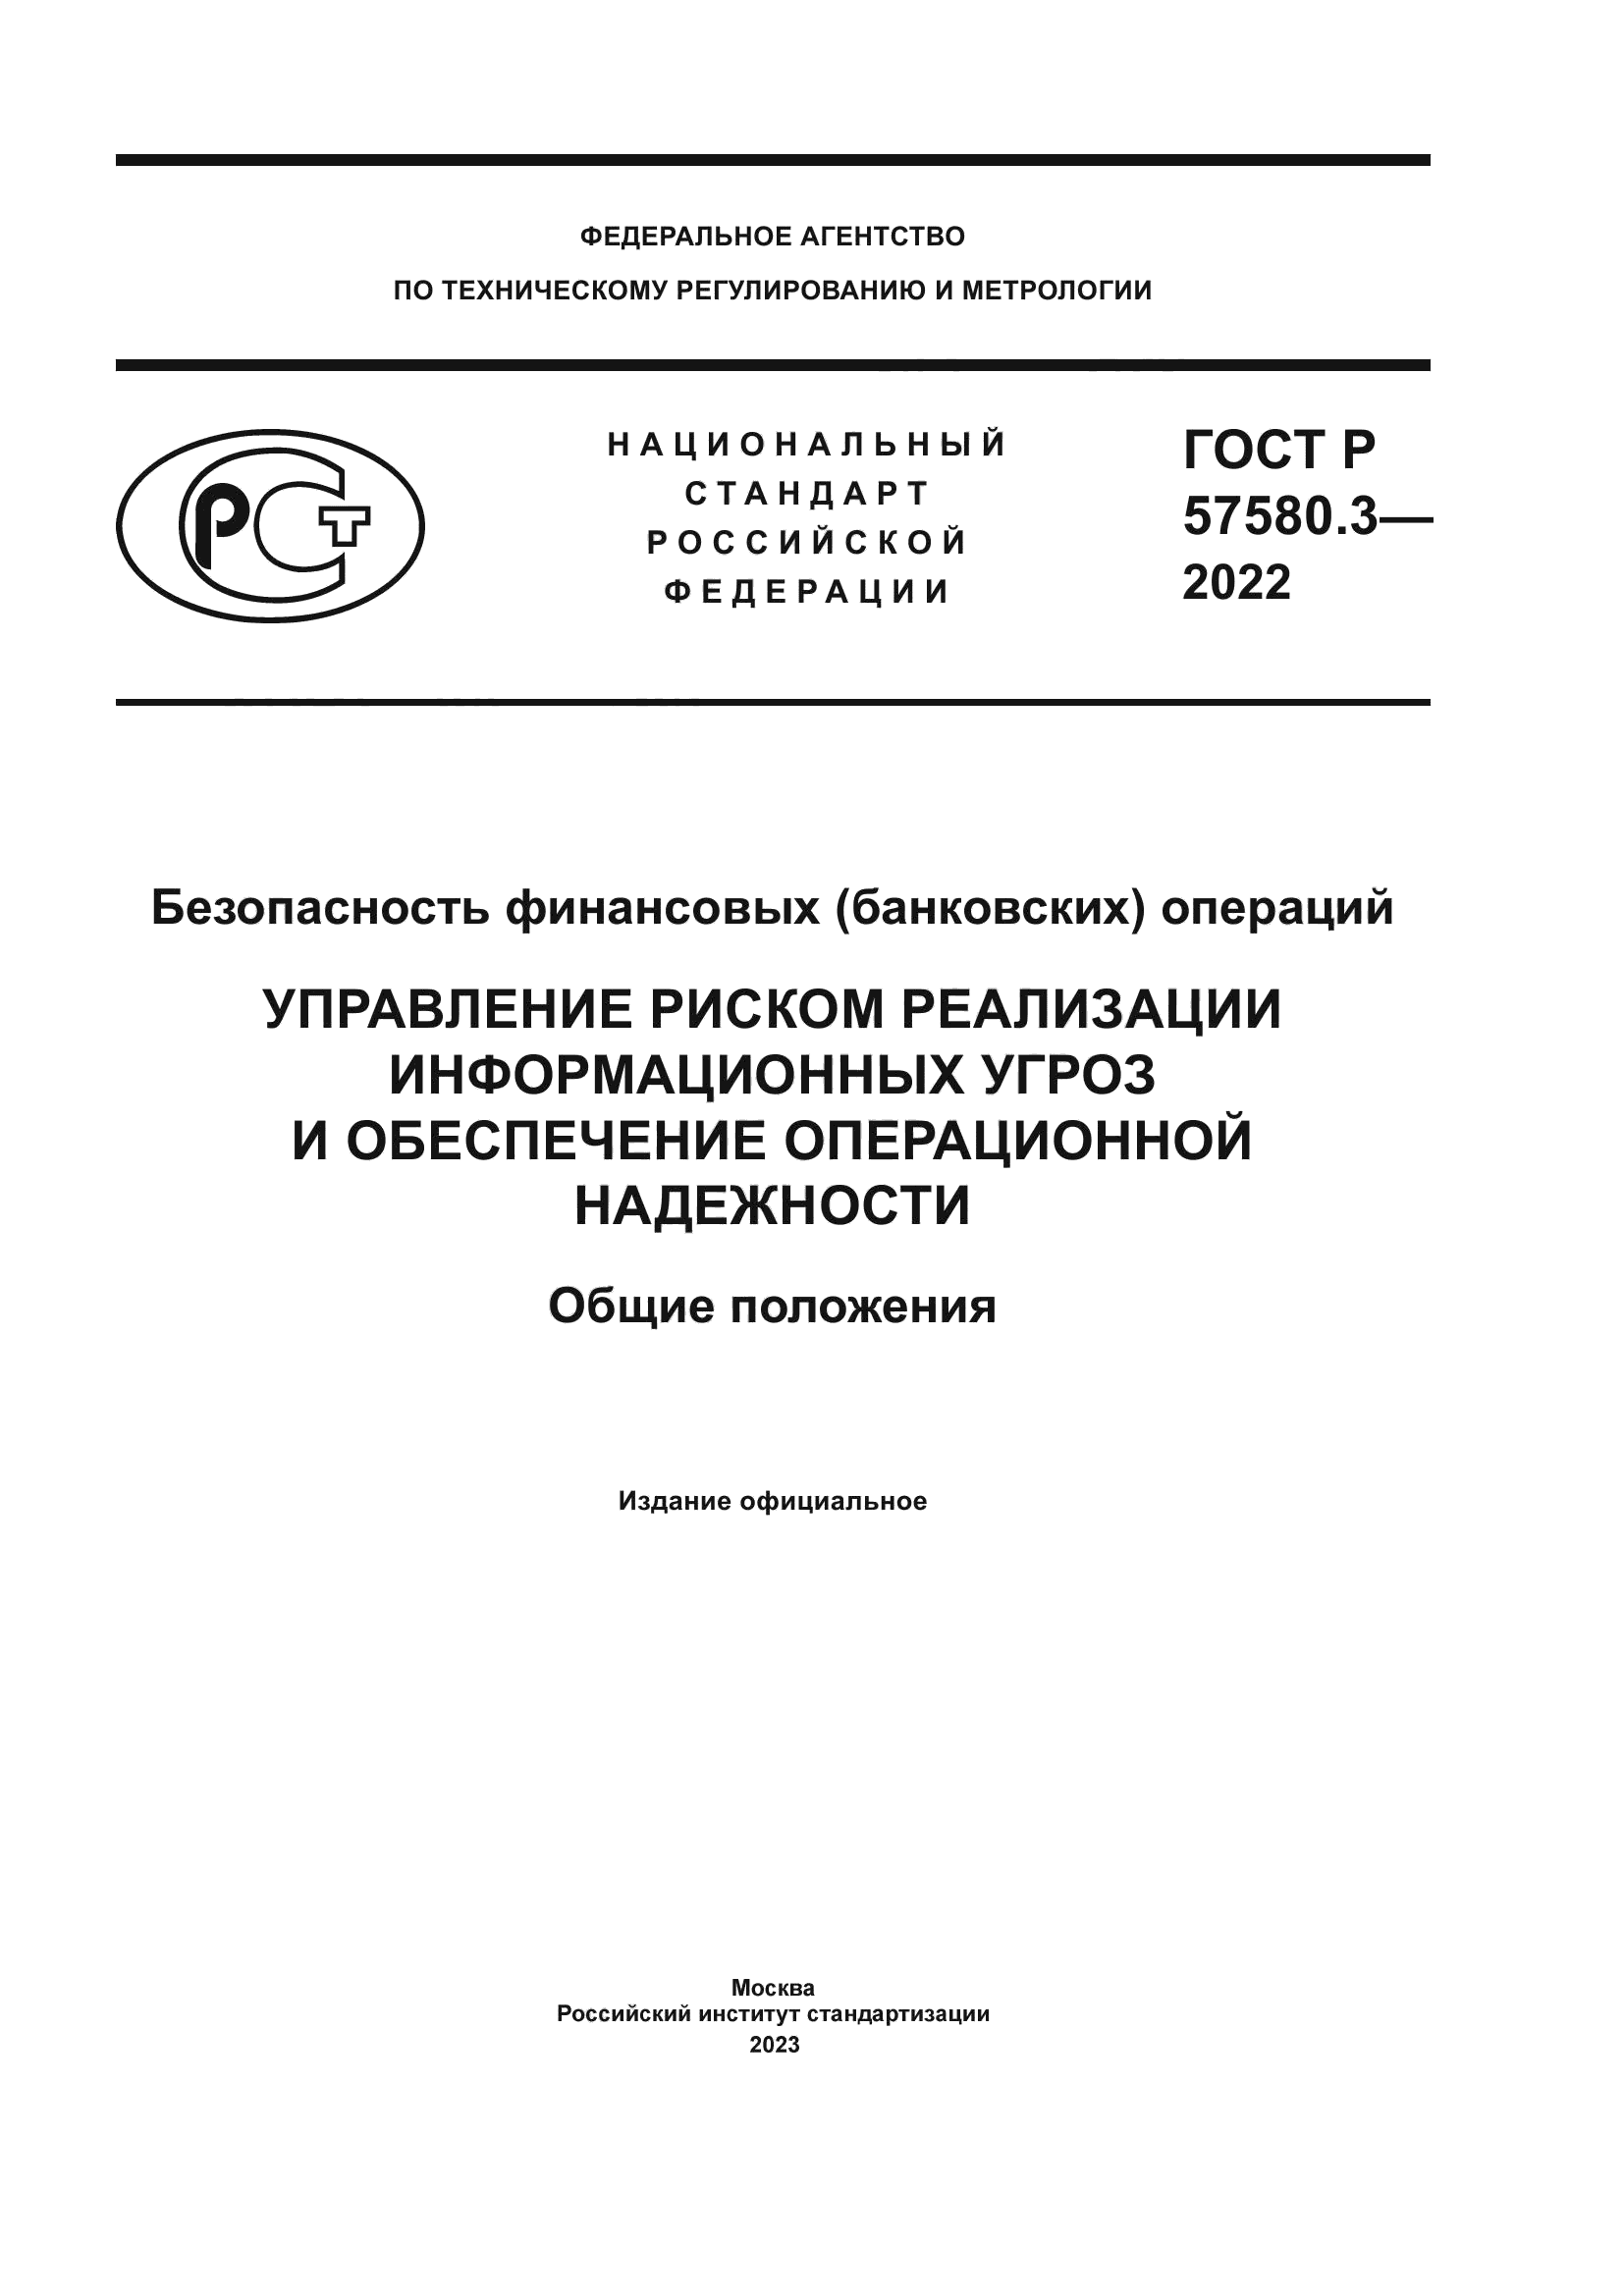 ГОСТ Р 57580.3-2022